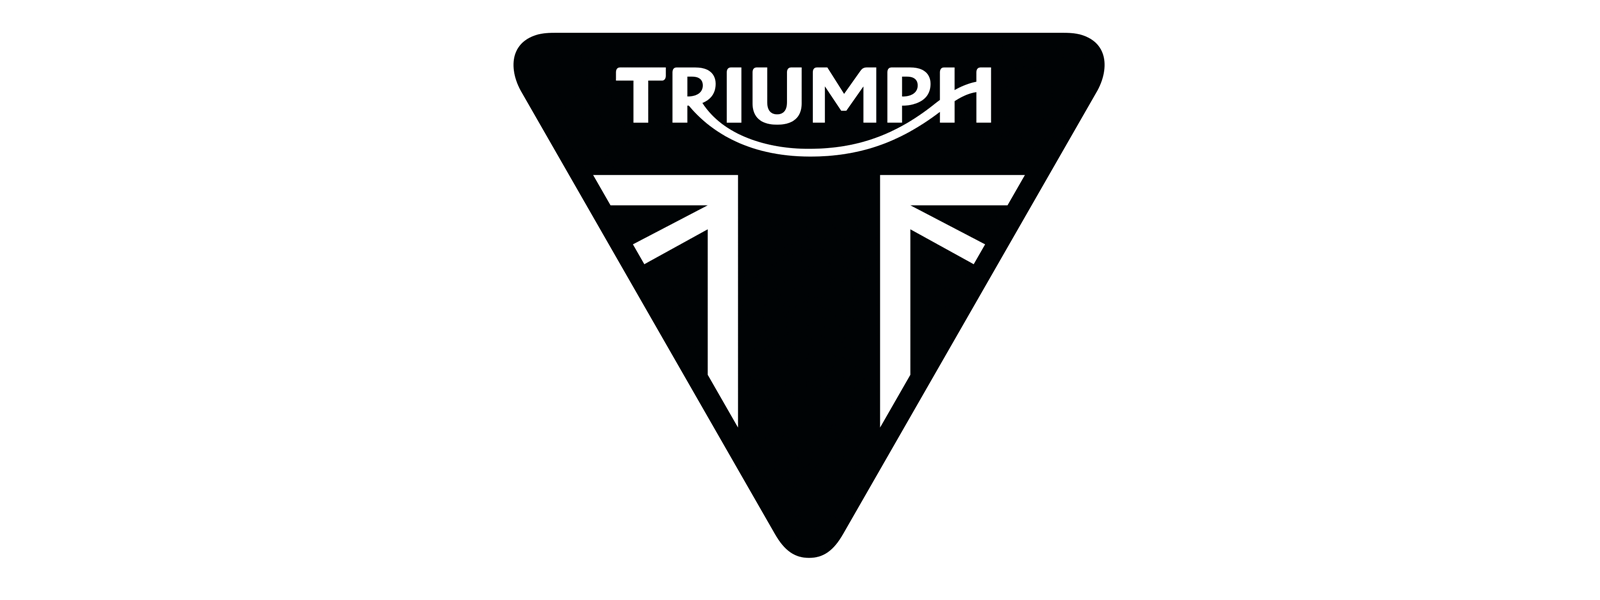 Triuph Logo - Triumph logo | Motorcycle brands: logo, specs, history.